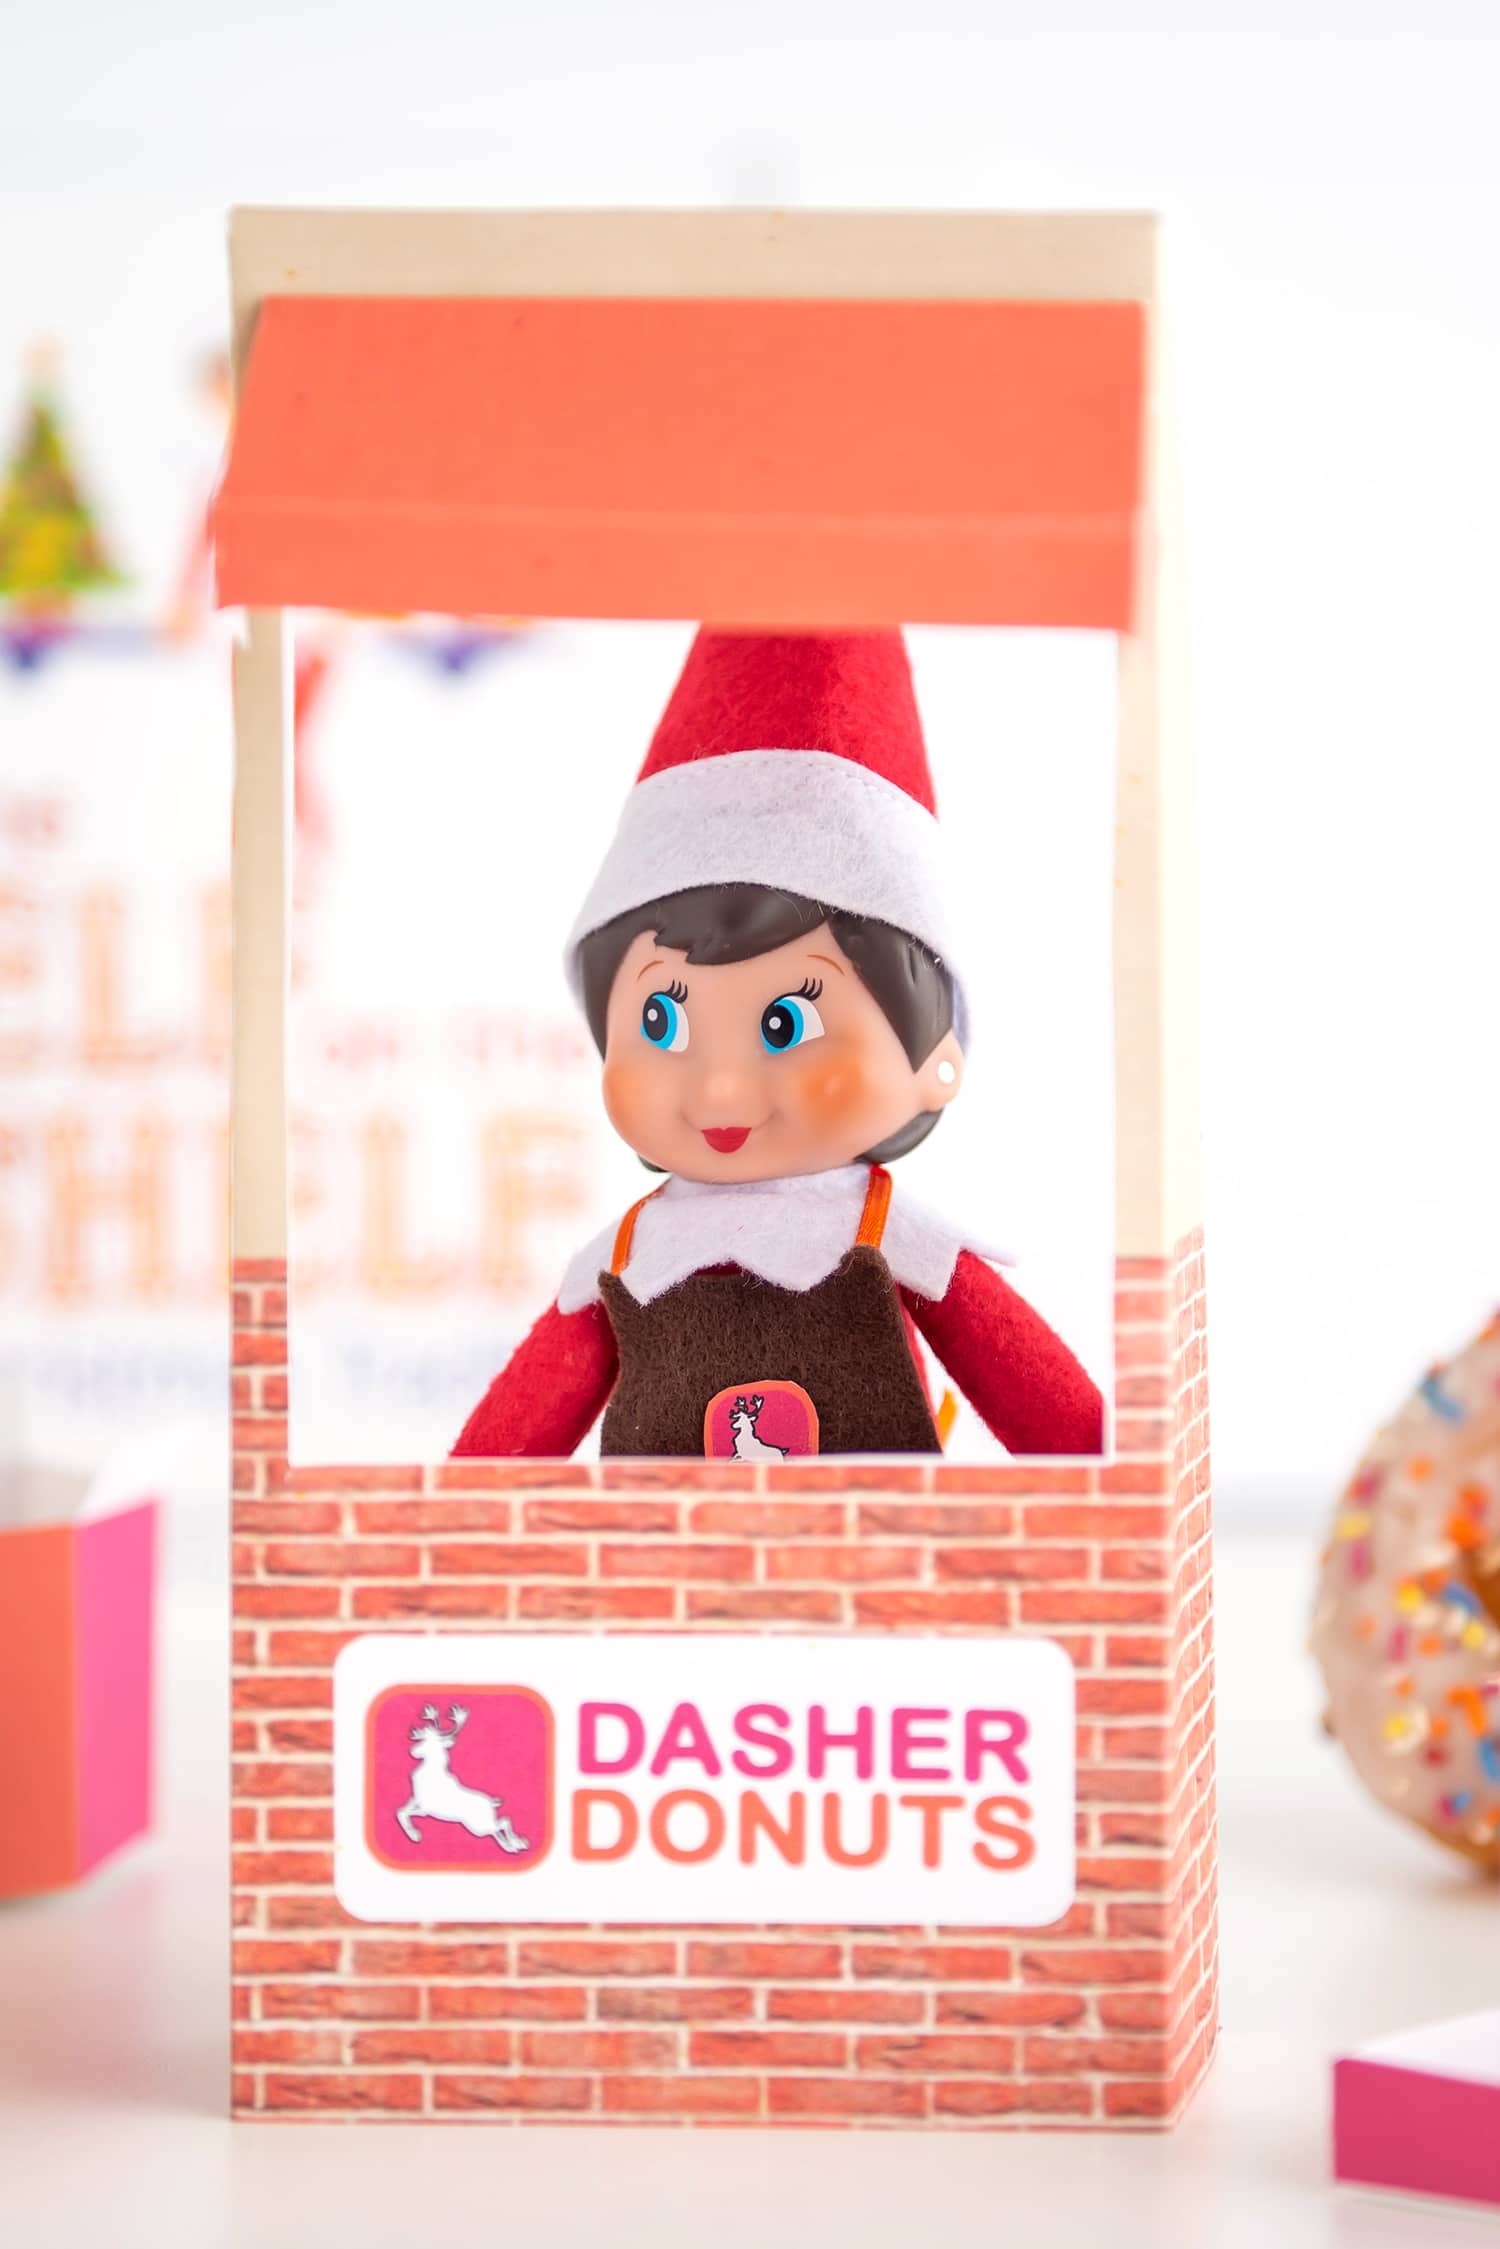 Cute Elf on the Shelf doll in a "Dasher Donuts" drive thru window